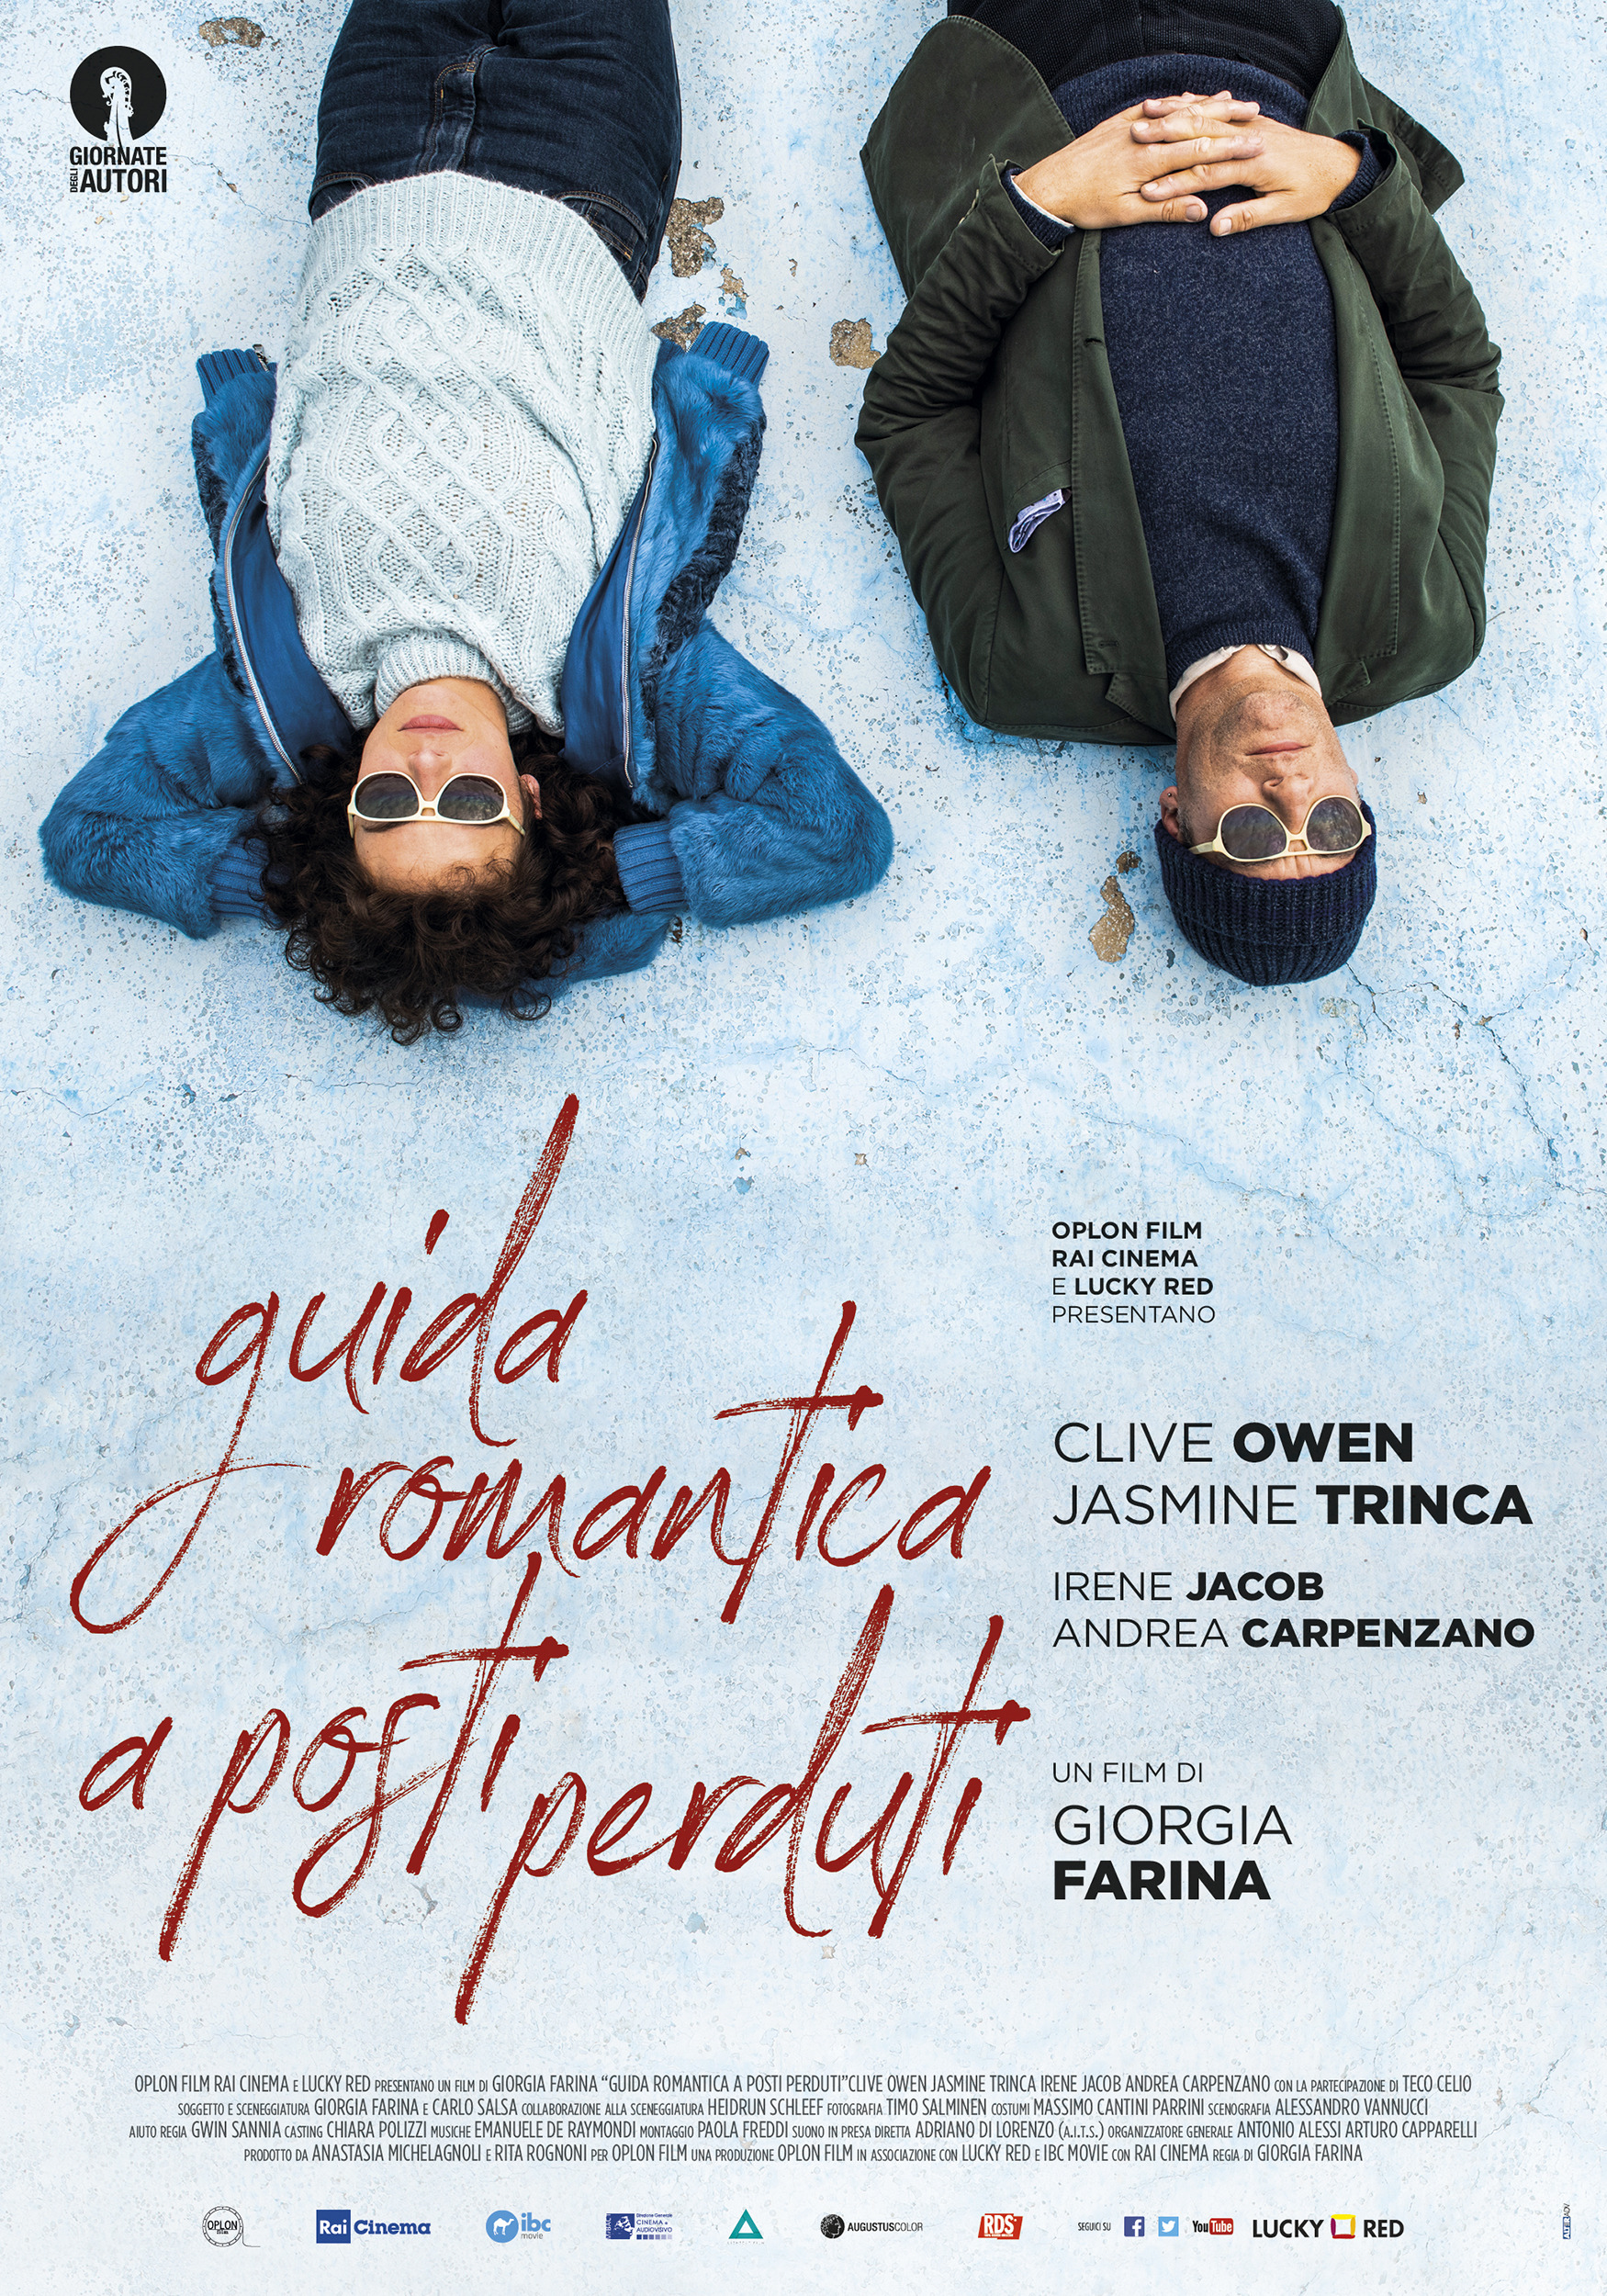 Mega Sized Movie Poster Image for Guida romantica a posti perduti 